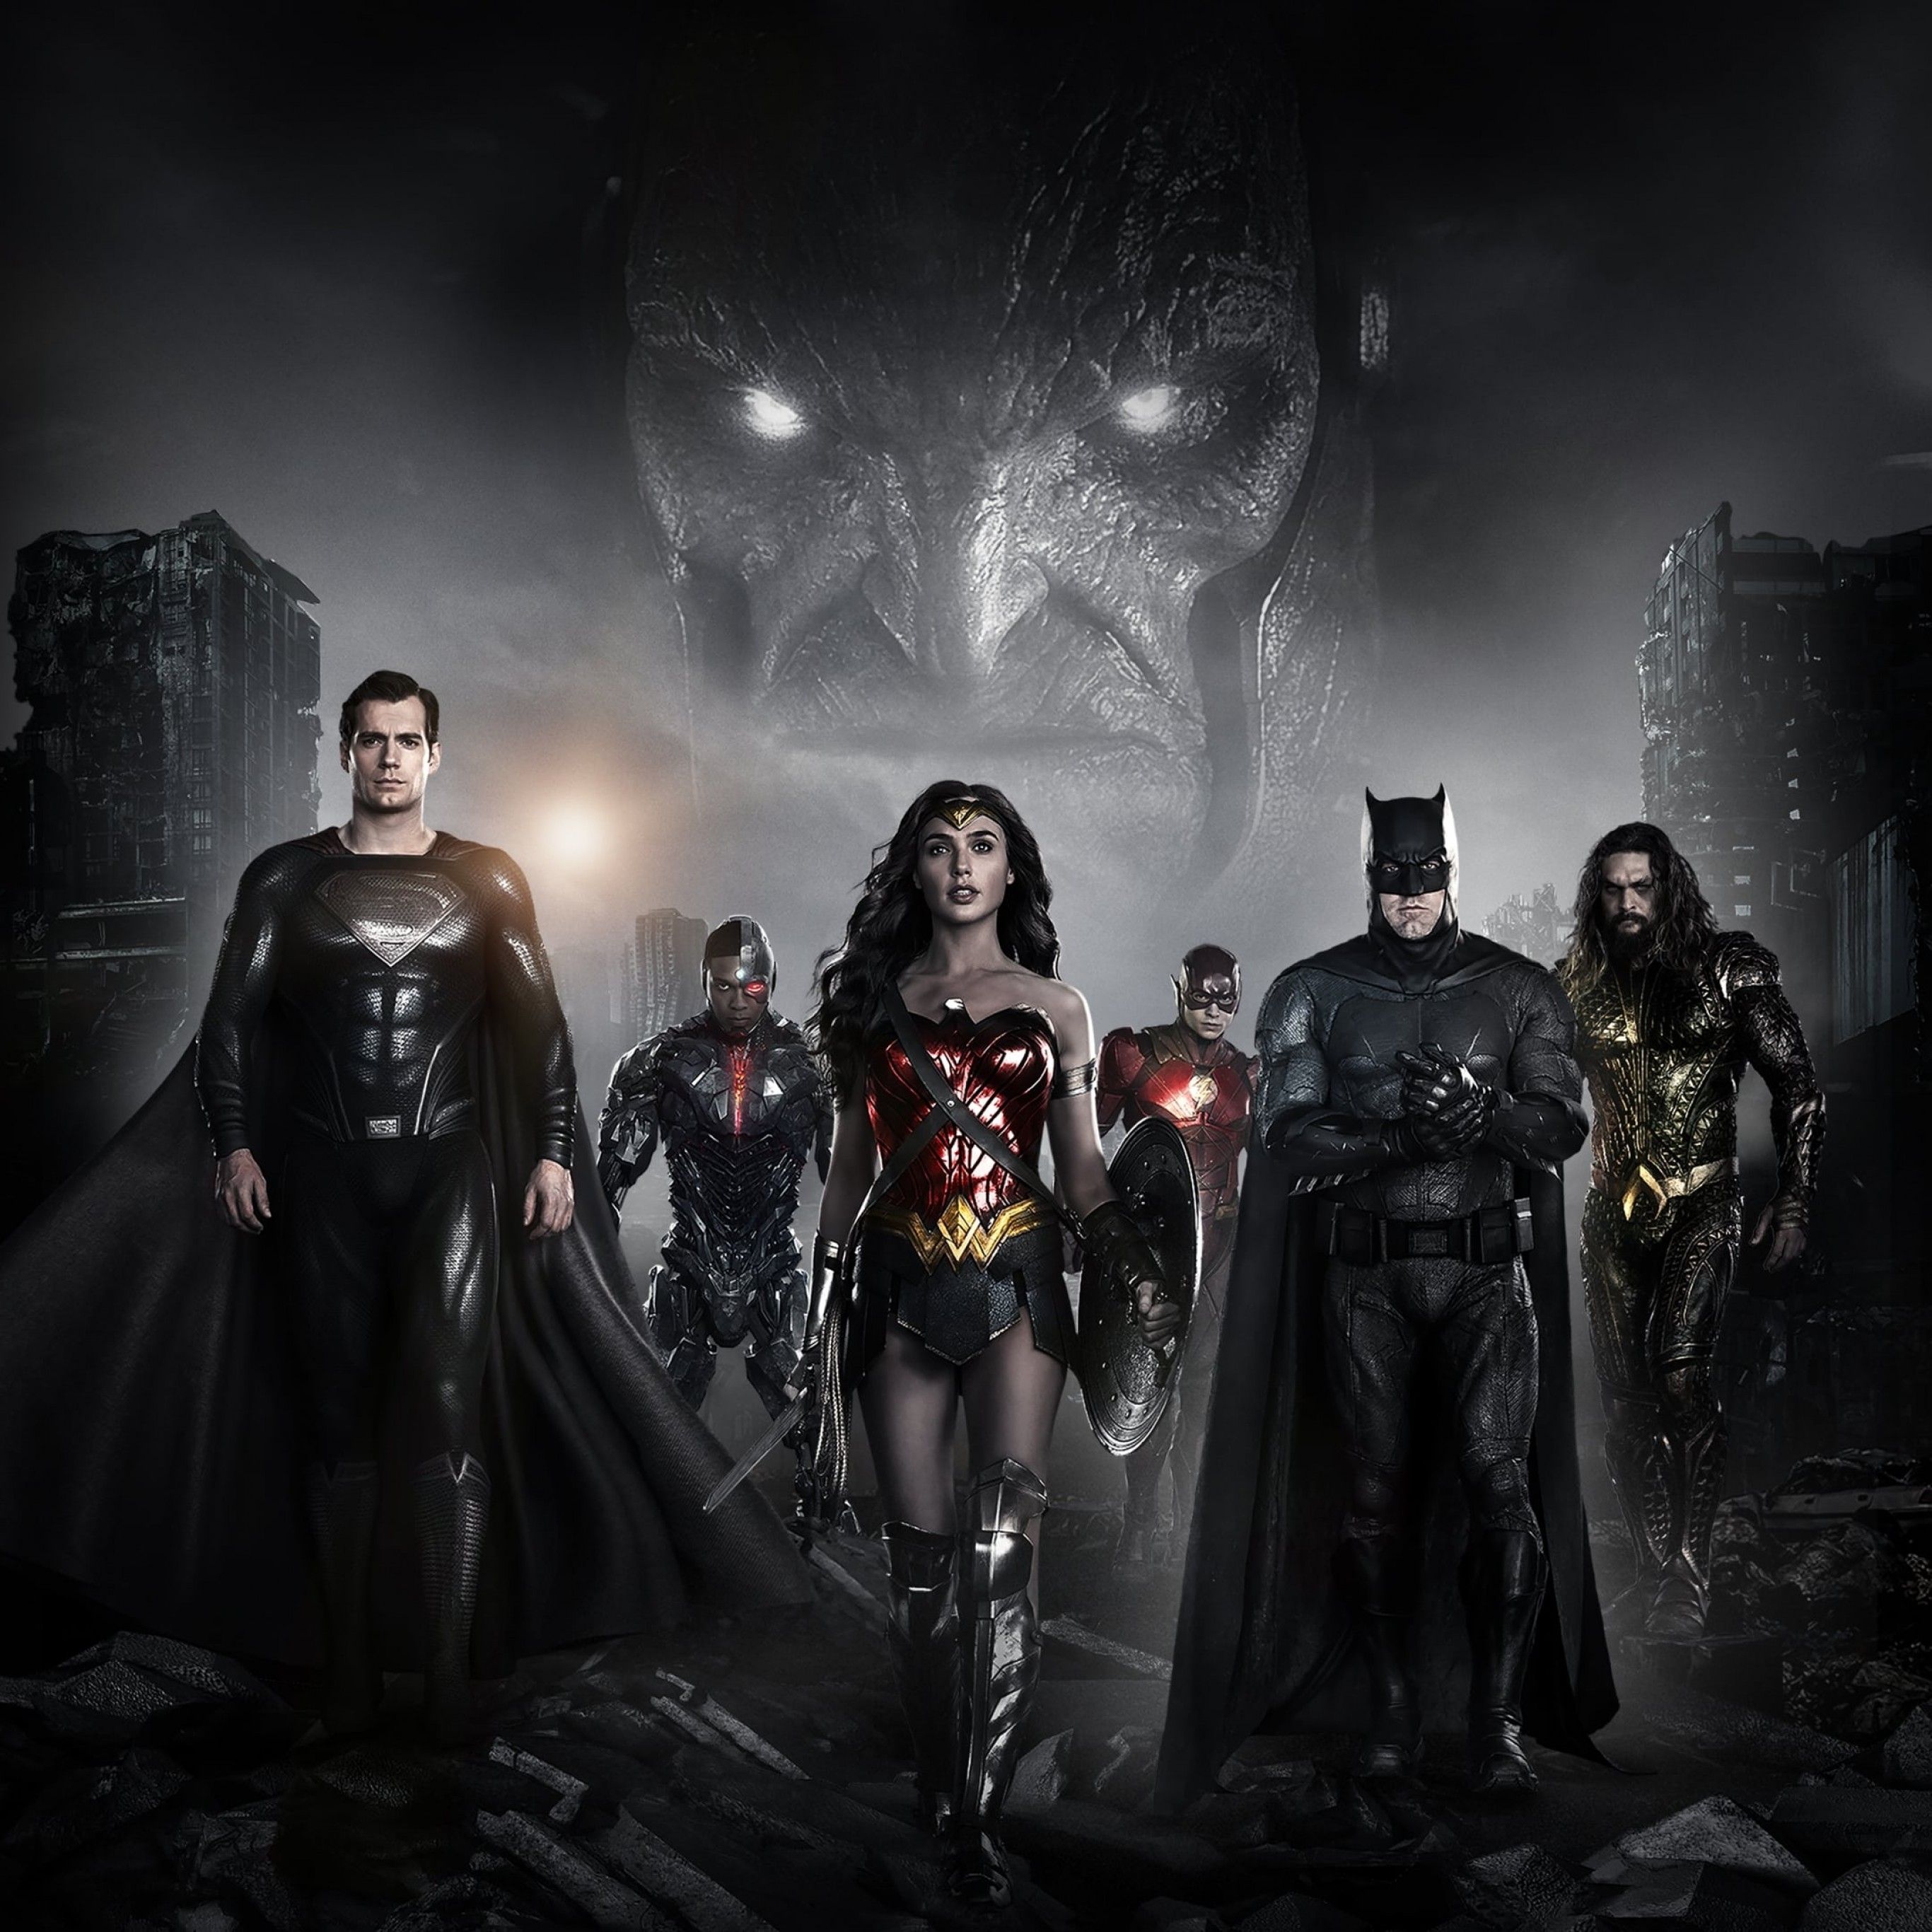 Zack Snyder's Justice League 4K Wallpaper, 2021 Movies, Superman, Batman, Wonder Woman, Aquaman, The Flash, Cyborg, Black Dark